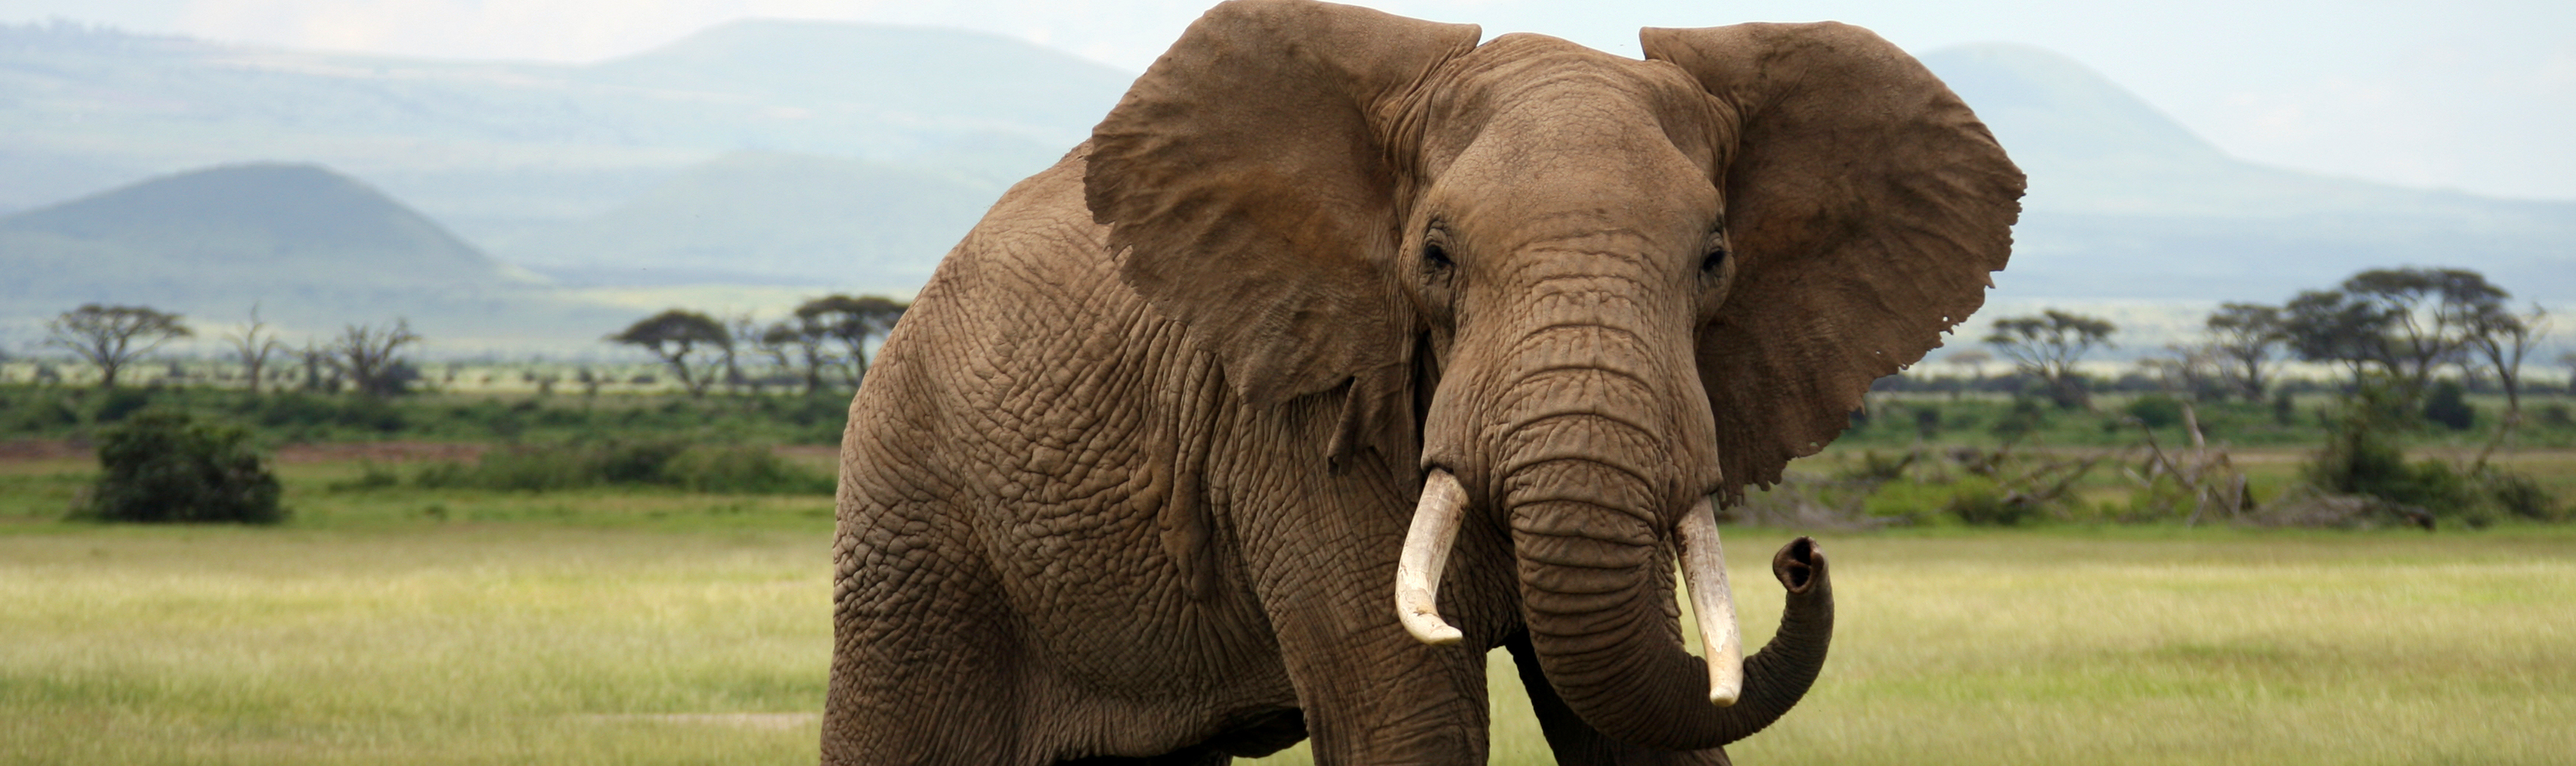 Species Profile: African Elephant (Loxodonta africana) | Rainforest ...